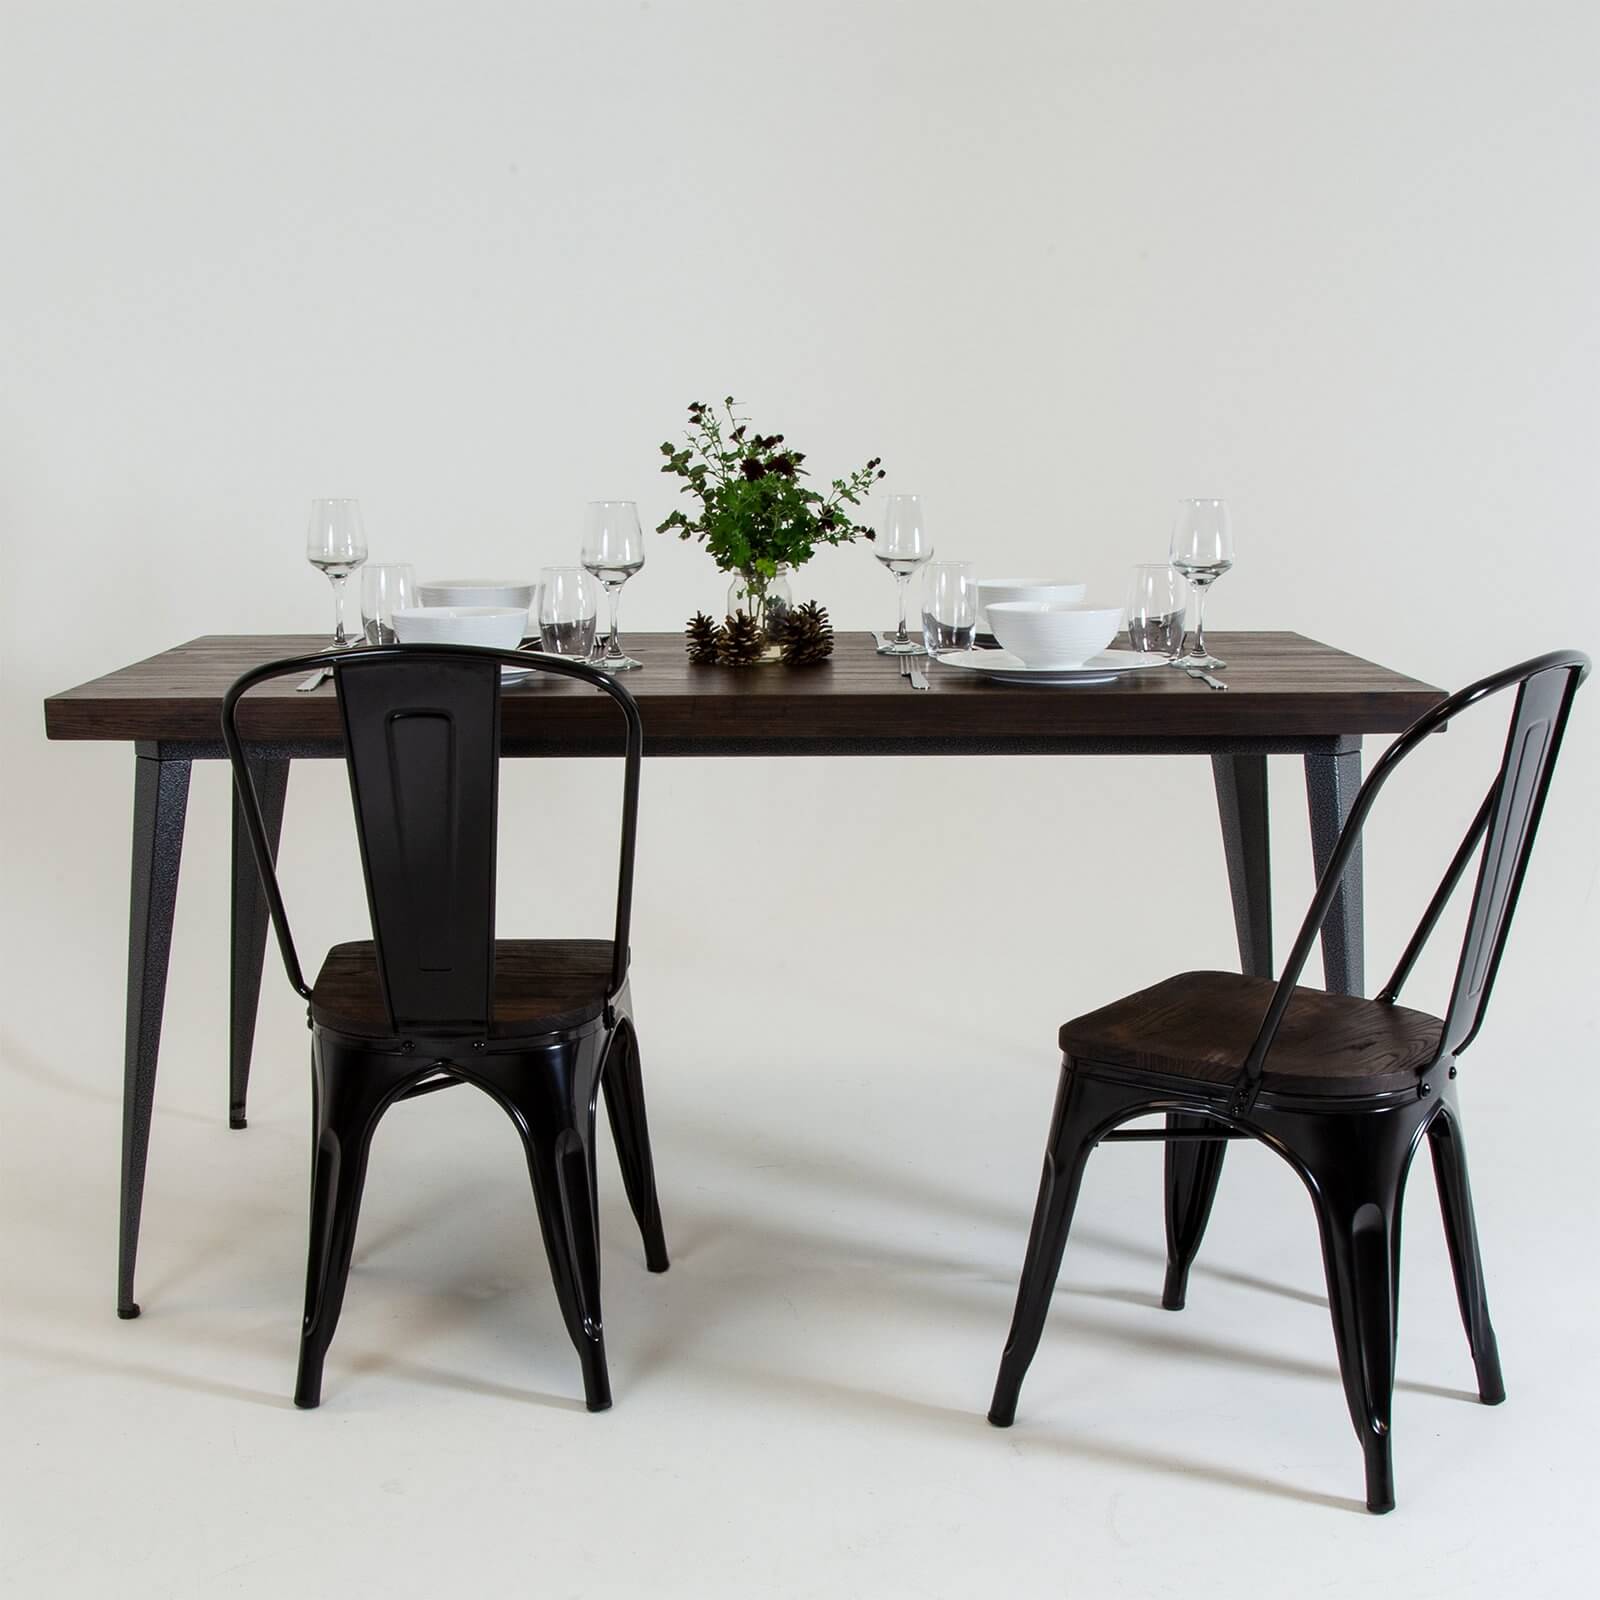 Pair of Metal & Wood Dining Chairs - Black